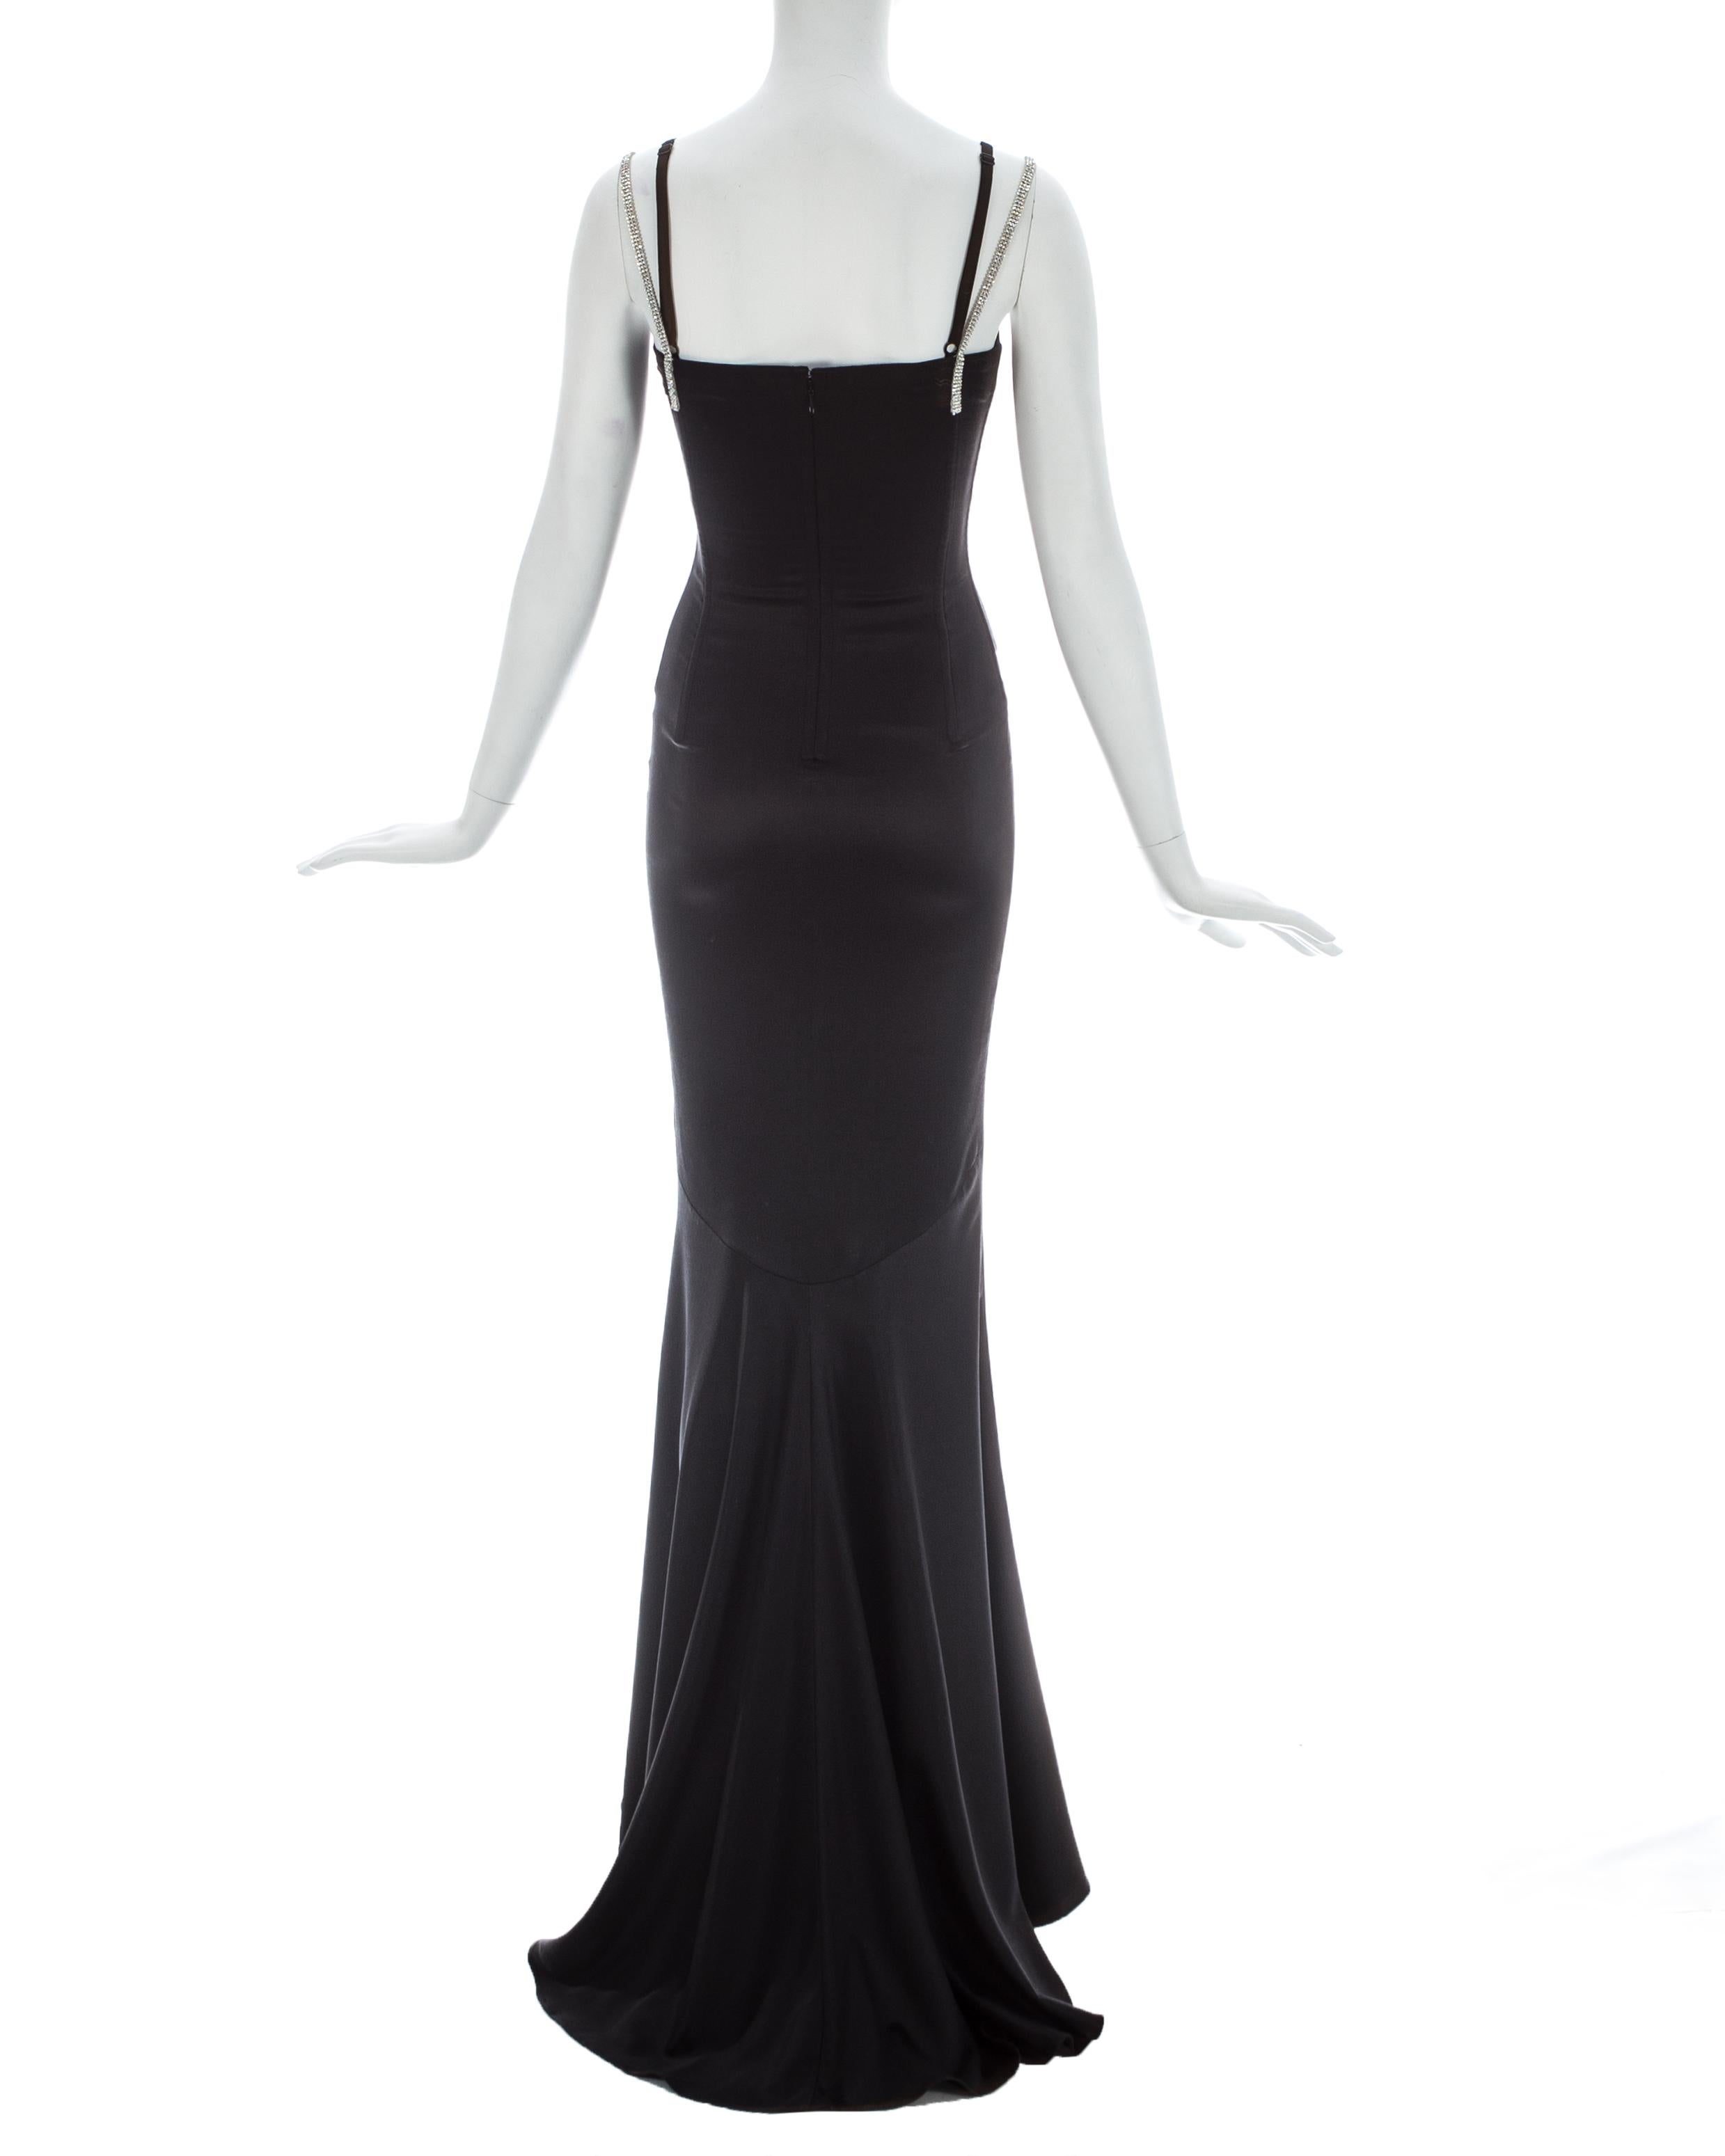 Black Dolce & Gabbana black satin corset evening dress with rhinestone straps, c. 2000